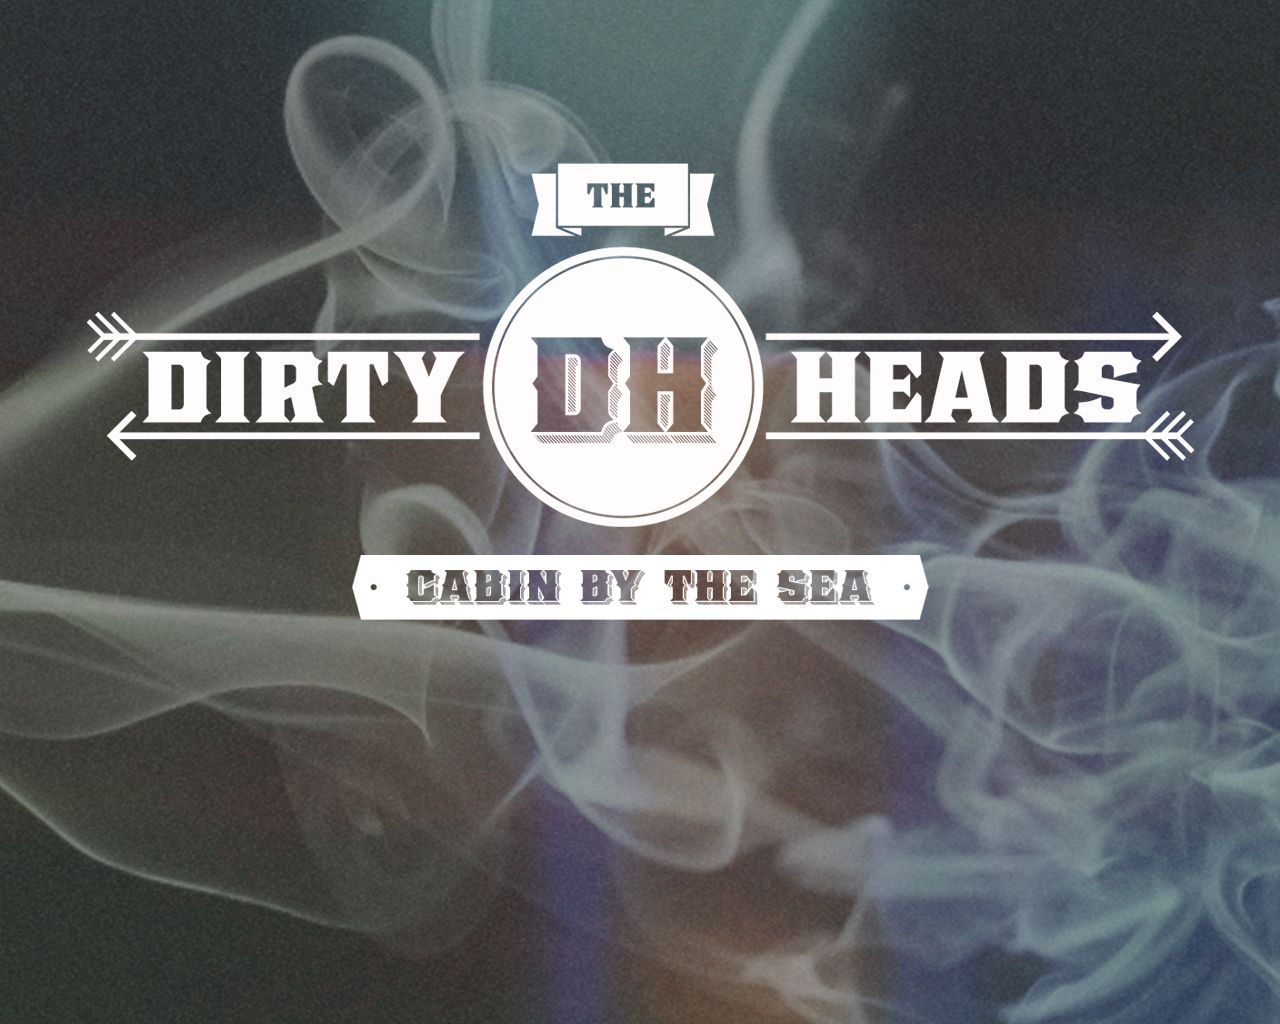 Dirty heads Logoslogolynx.com